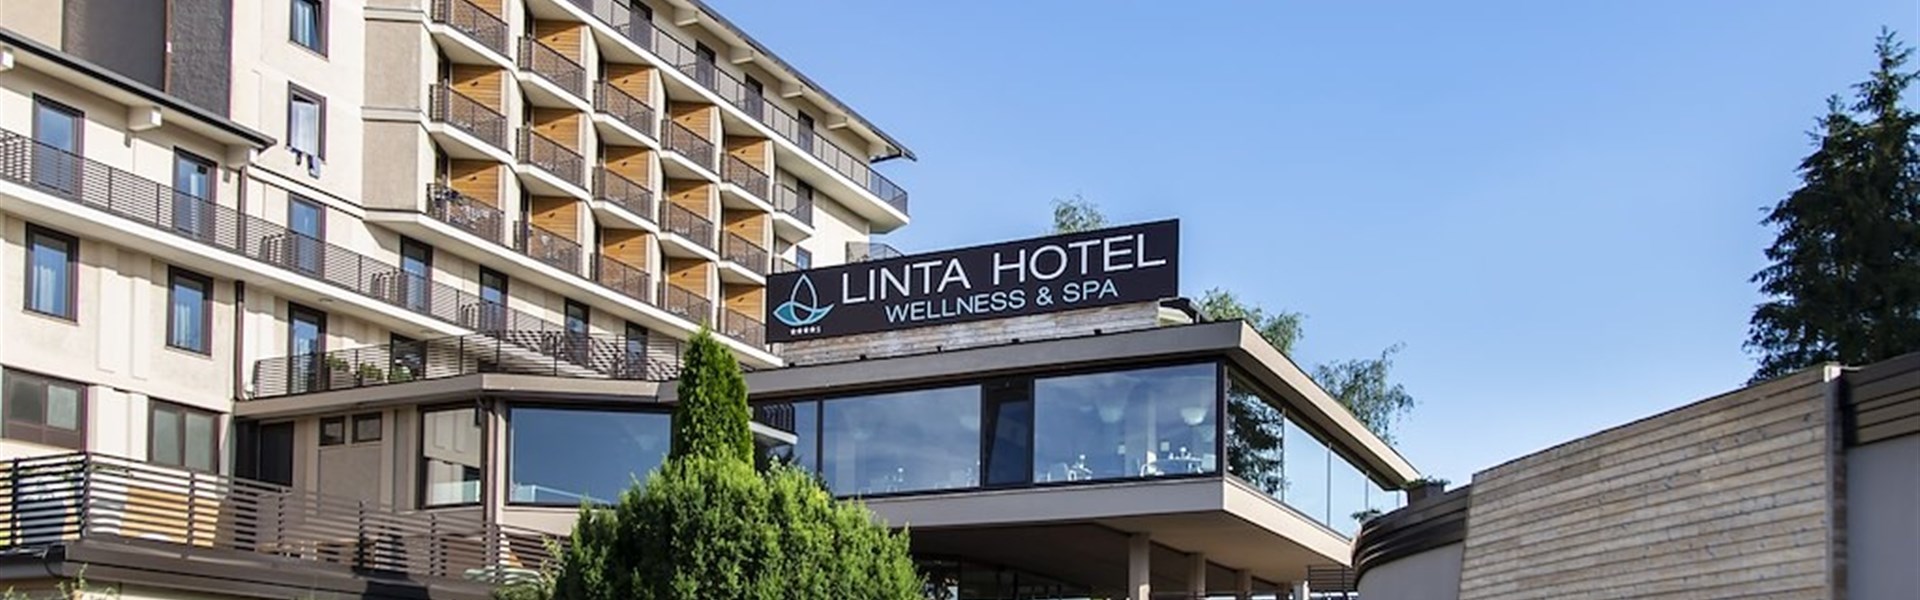 Hotel Linta Wellness & Spa (léto(/Sommer) - 